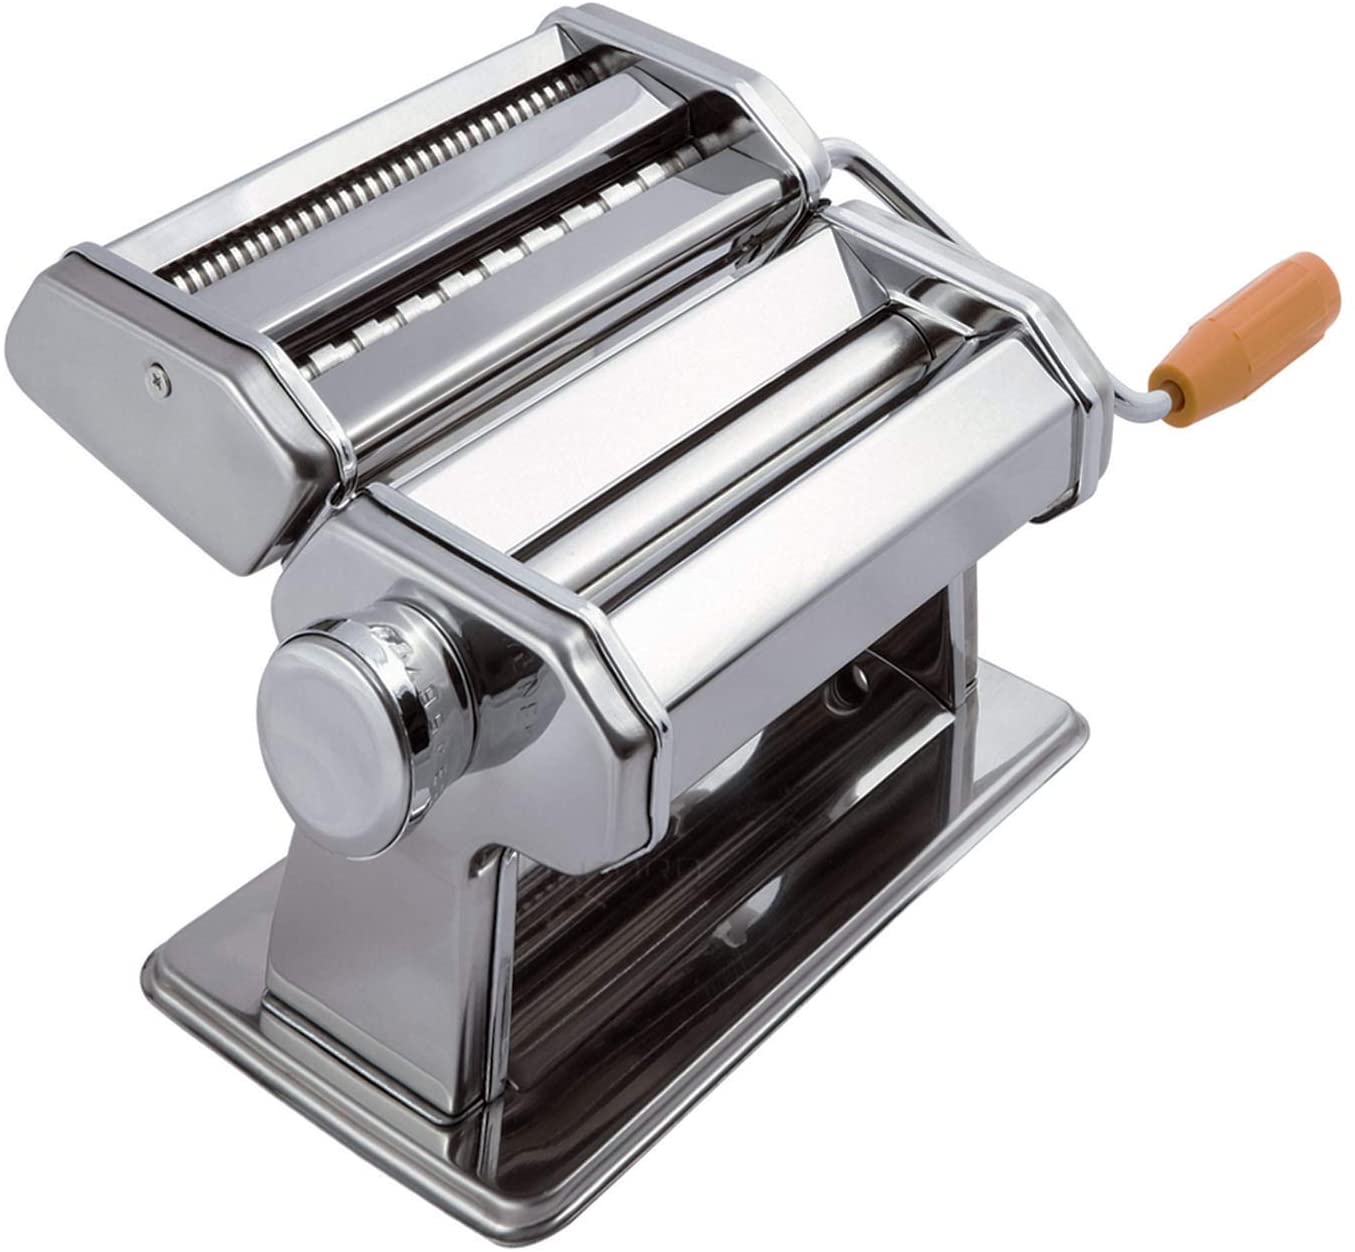 Mini Professional Pasta Maker Machine Hand Crank Bake Roller Spaghetti  Noddle Maker Pasta Cutter For Kitchen Aid Mixer From Amllrf, $96.1